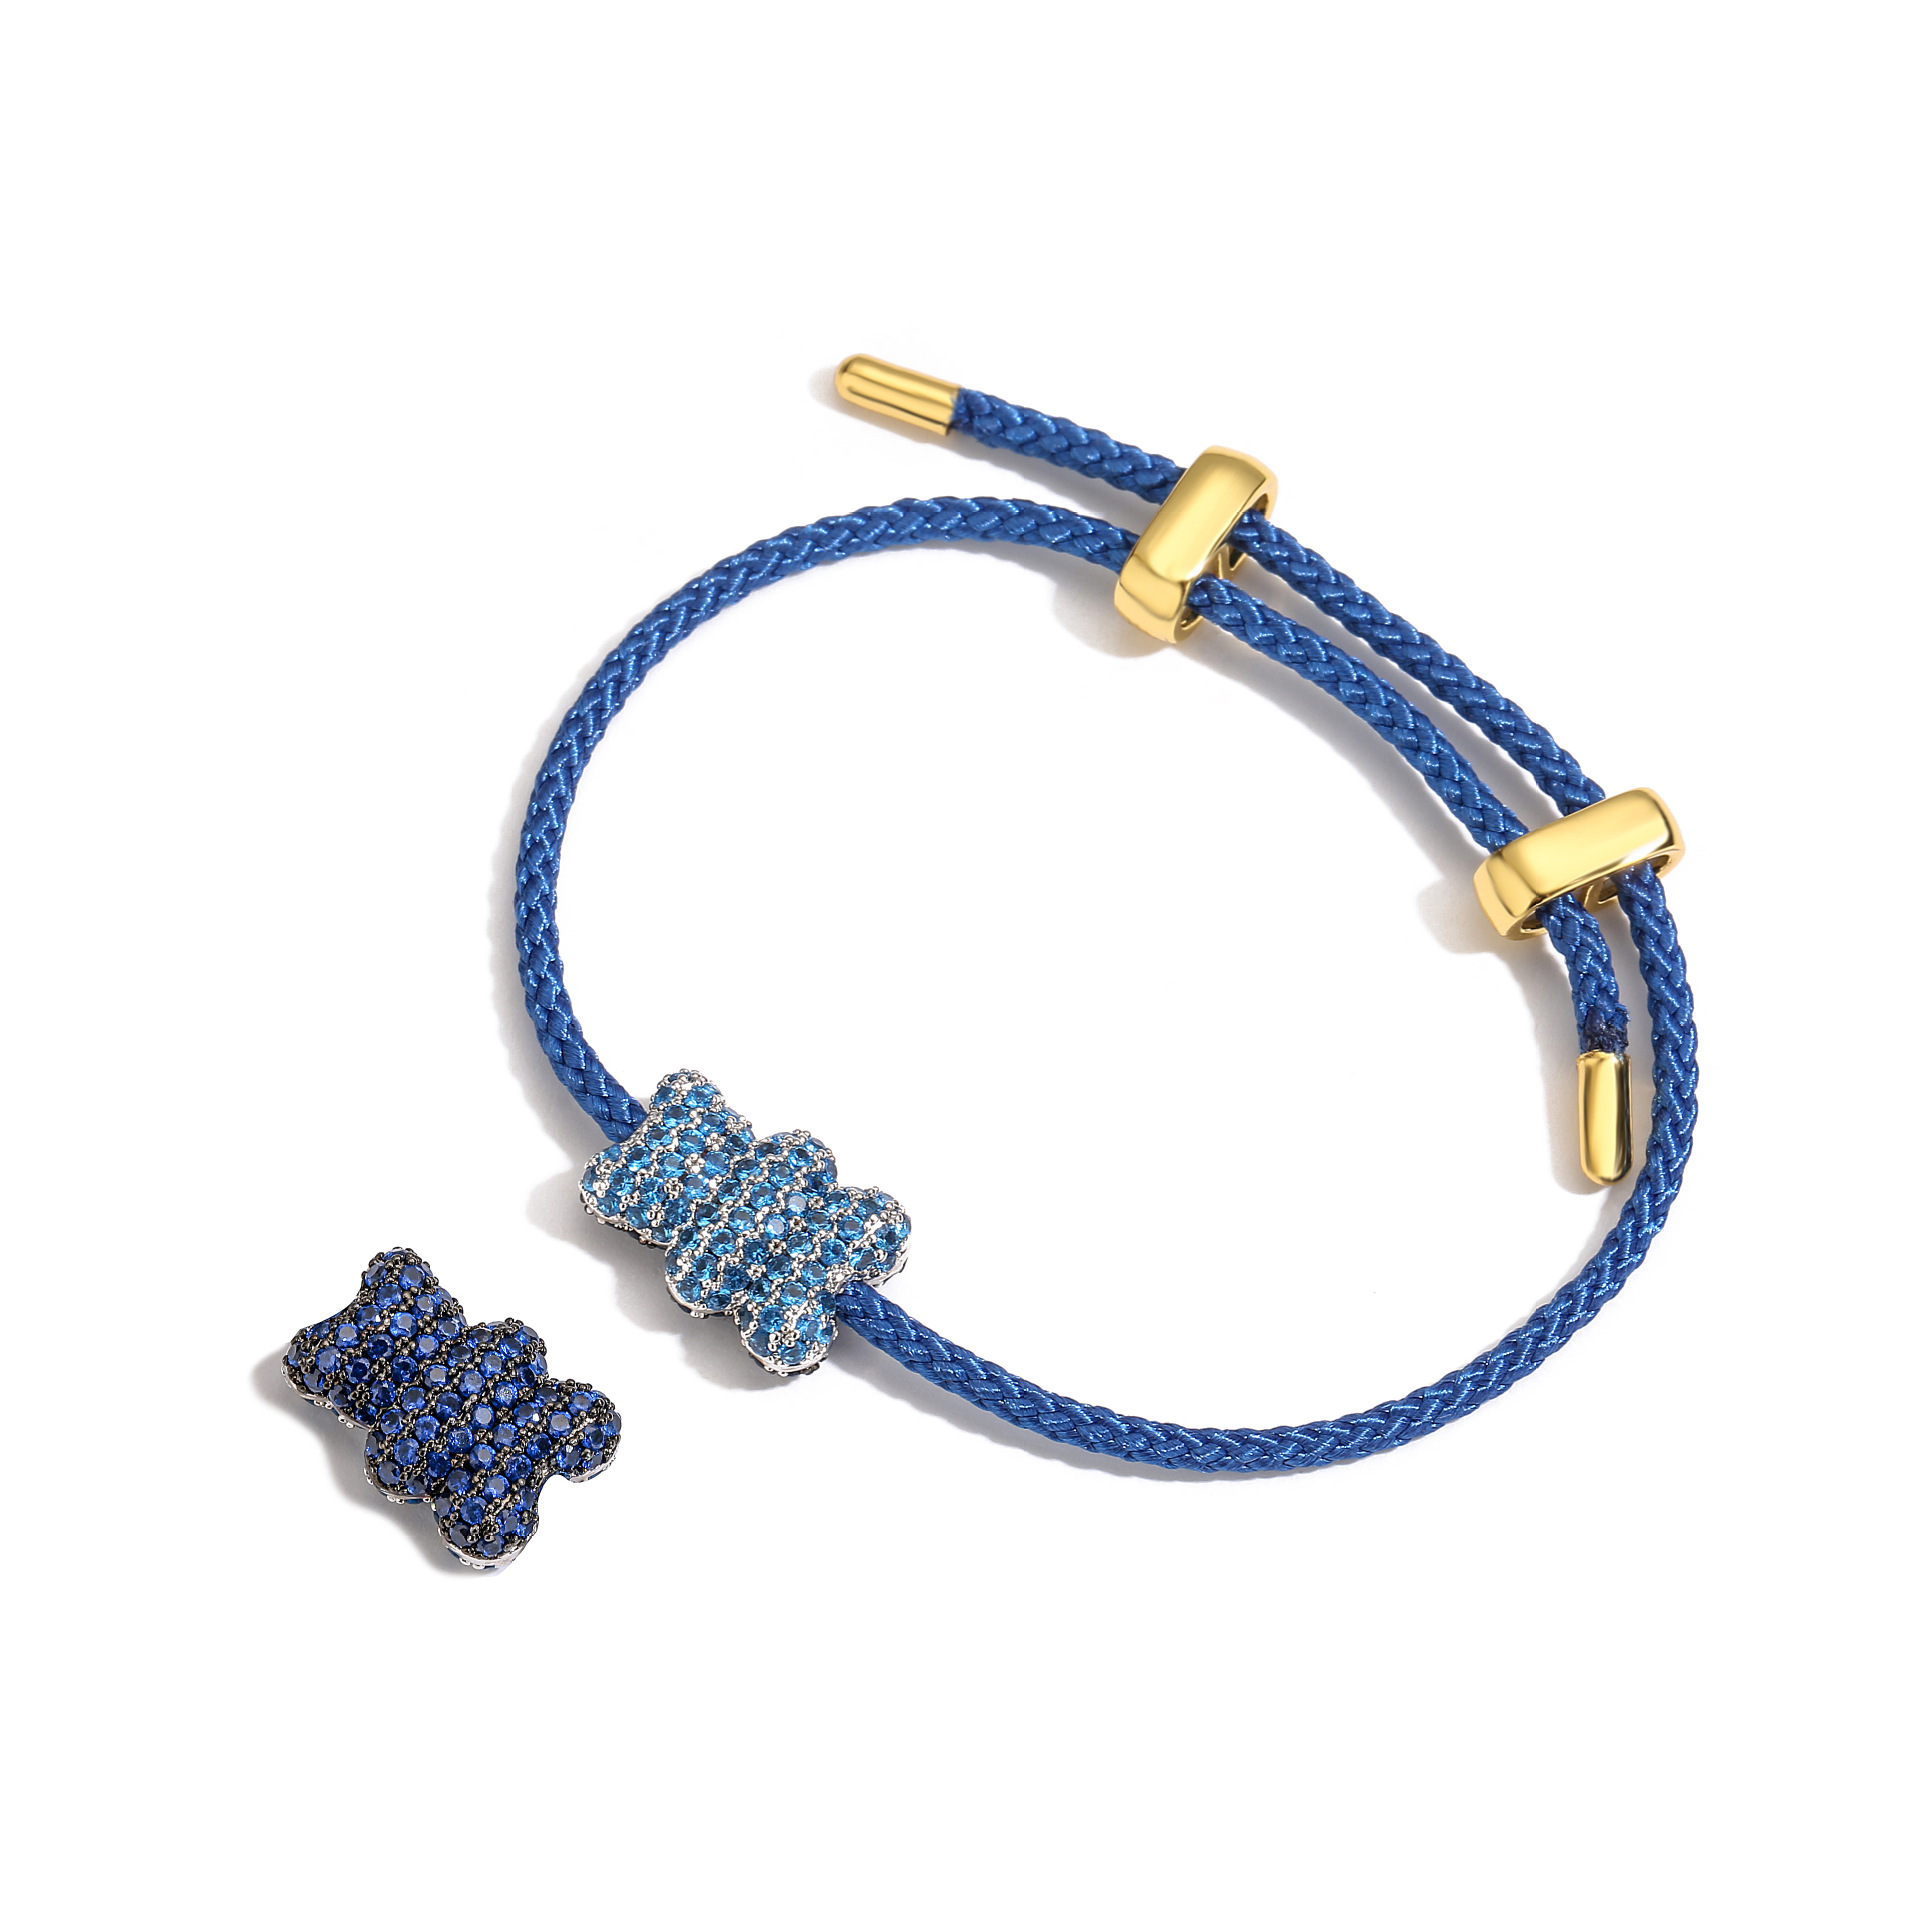 5:Dark blue bracelet